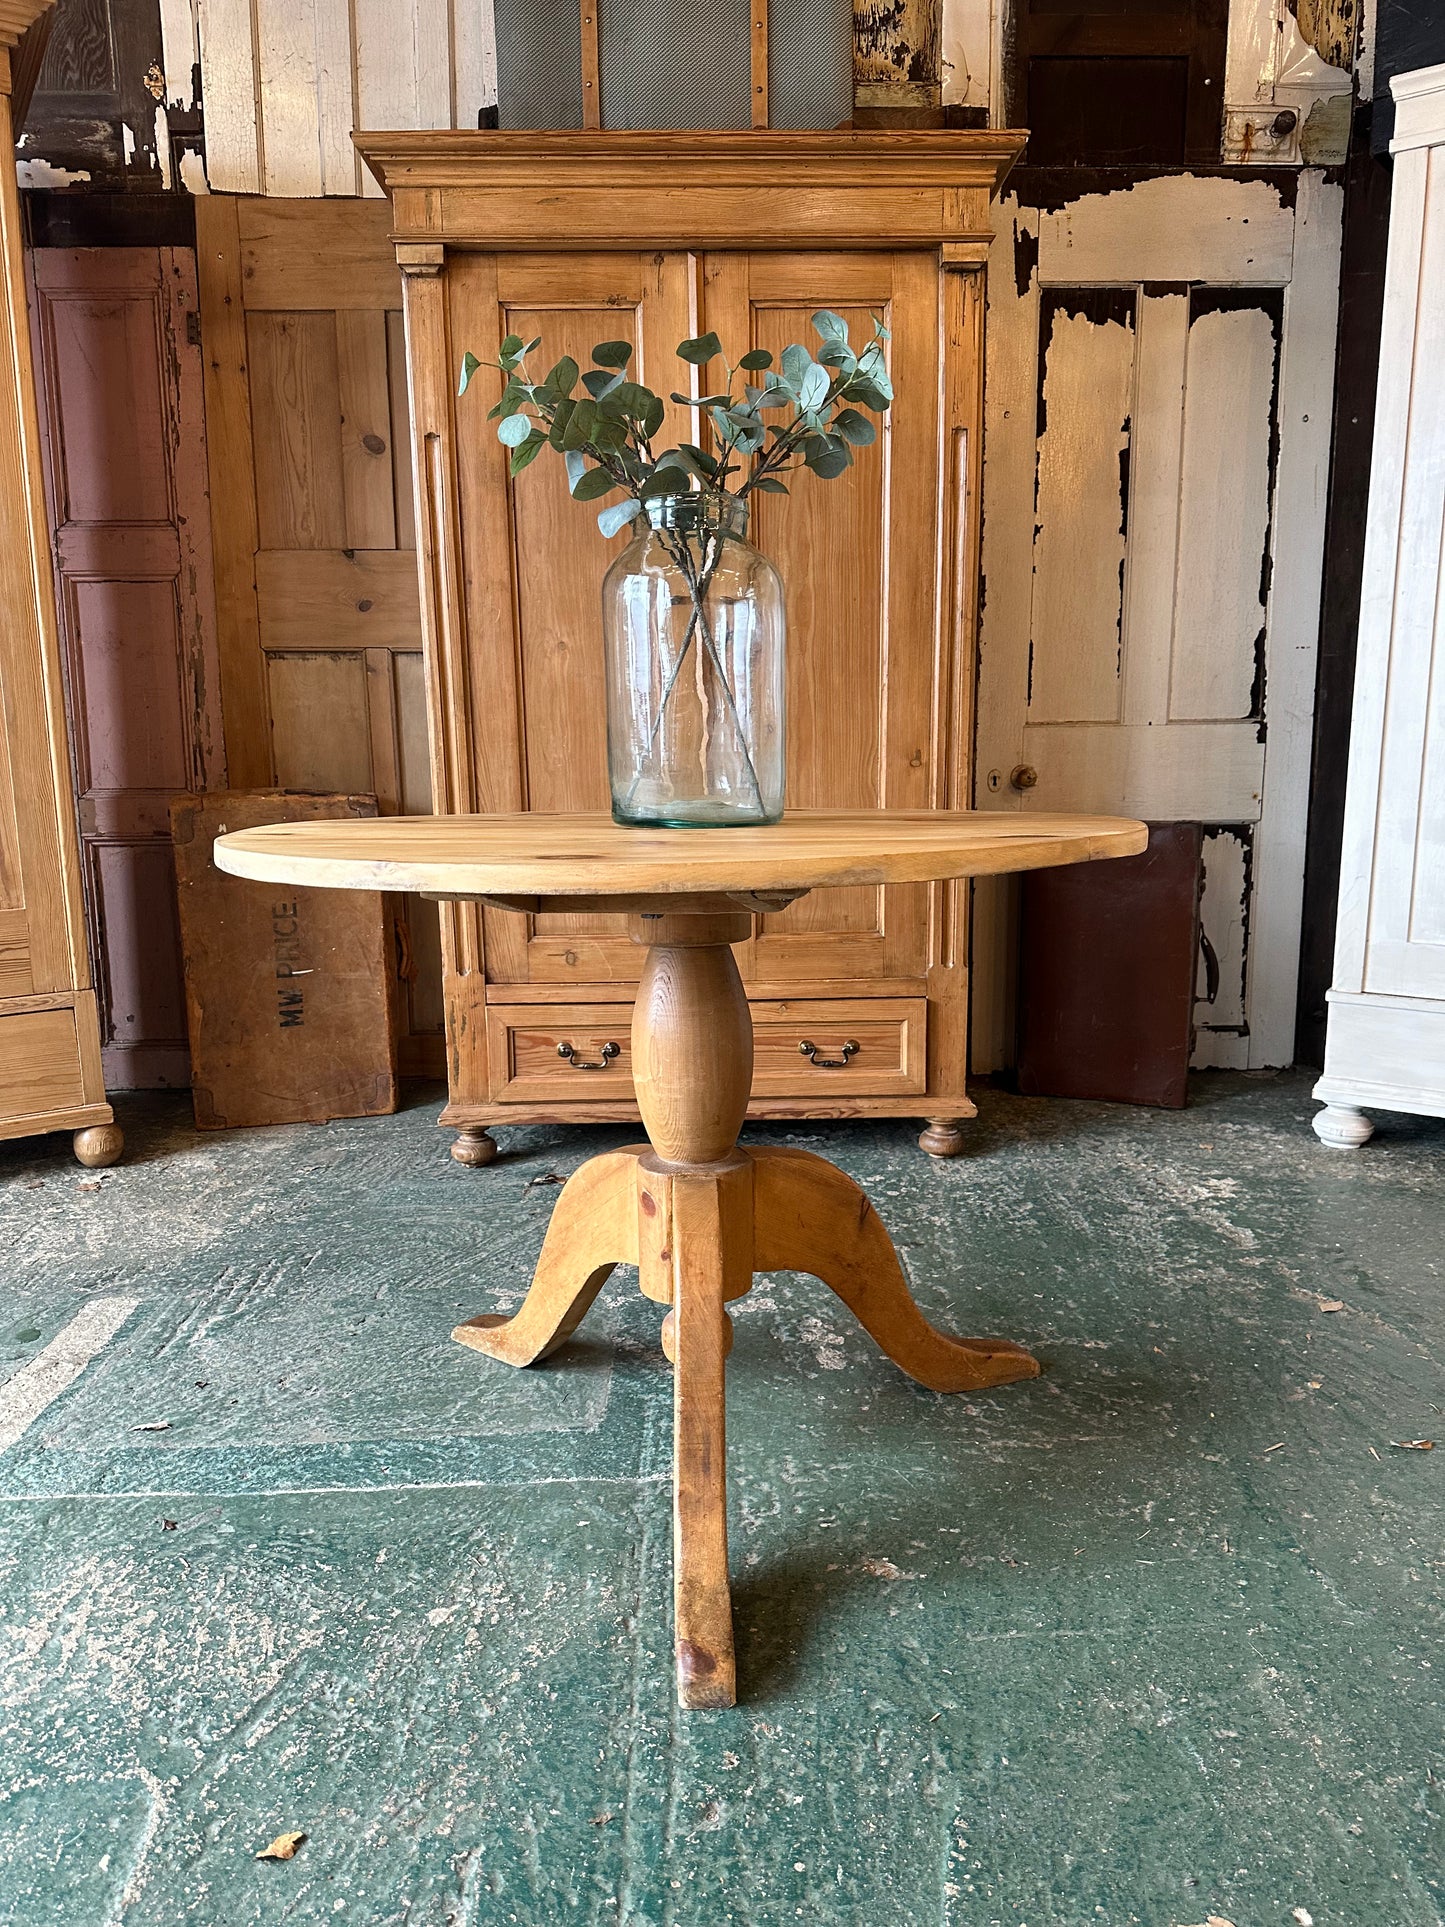 Rustic pedestal table